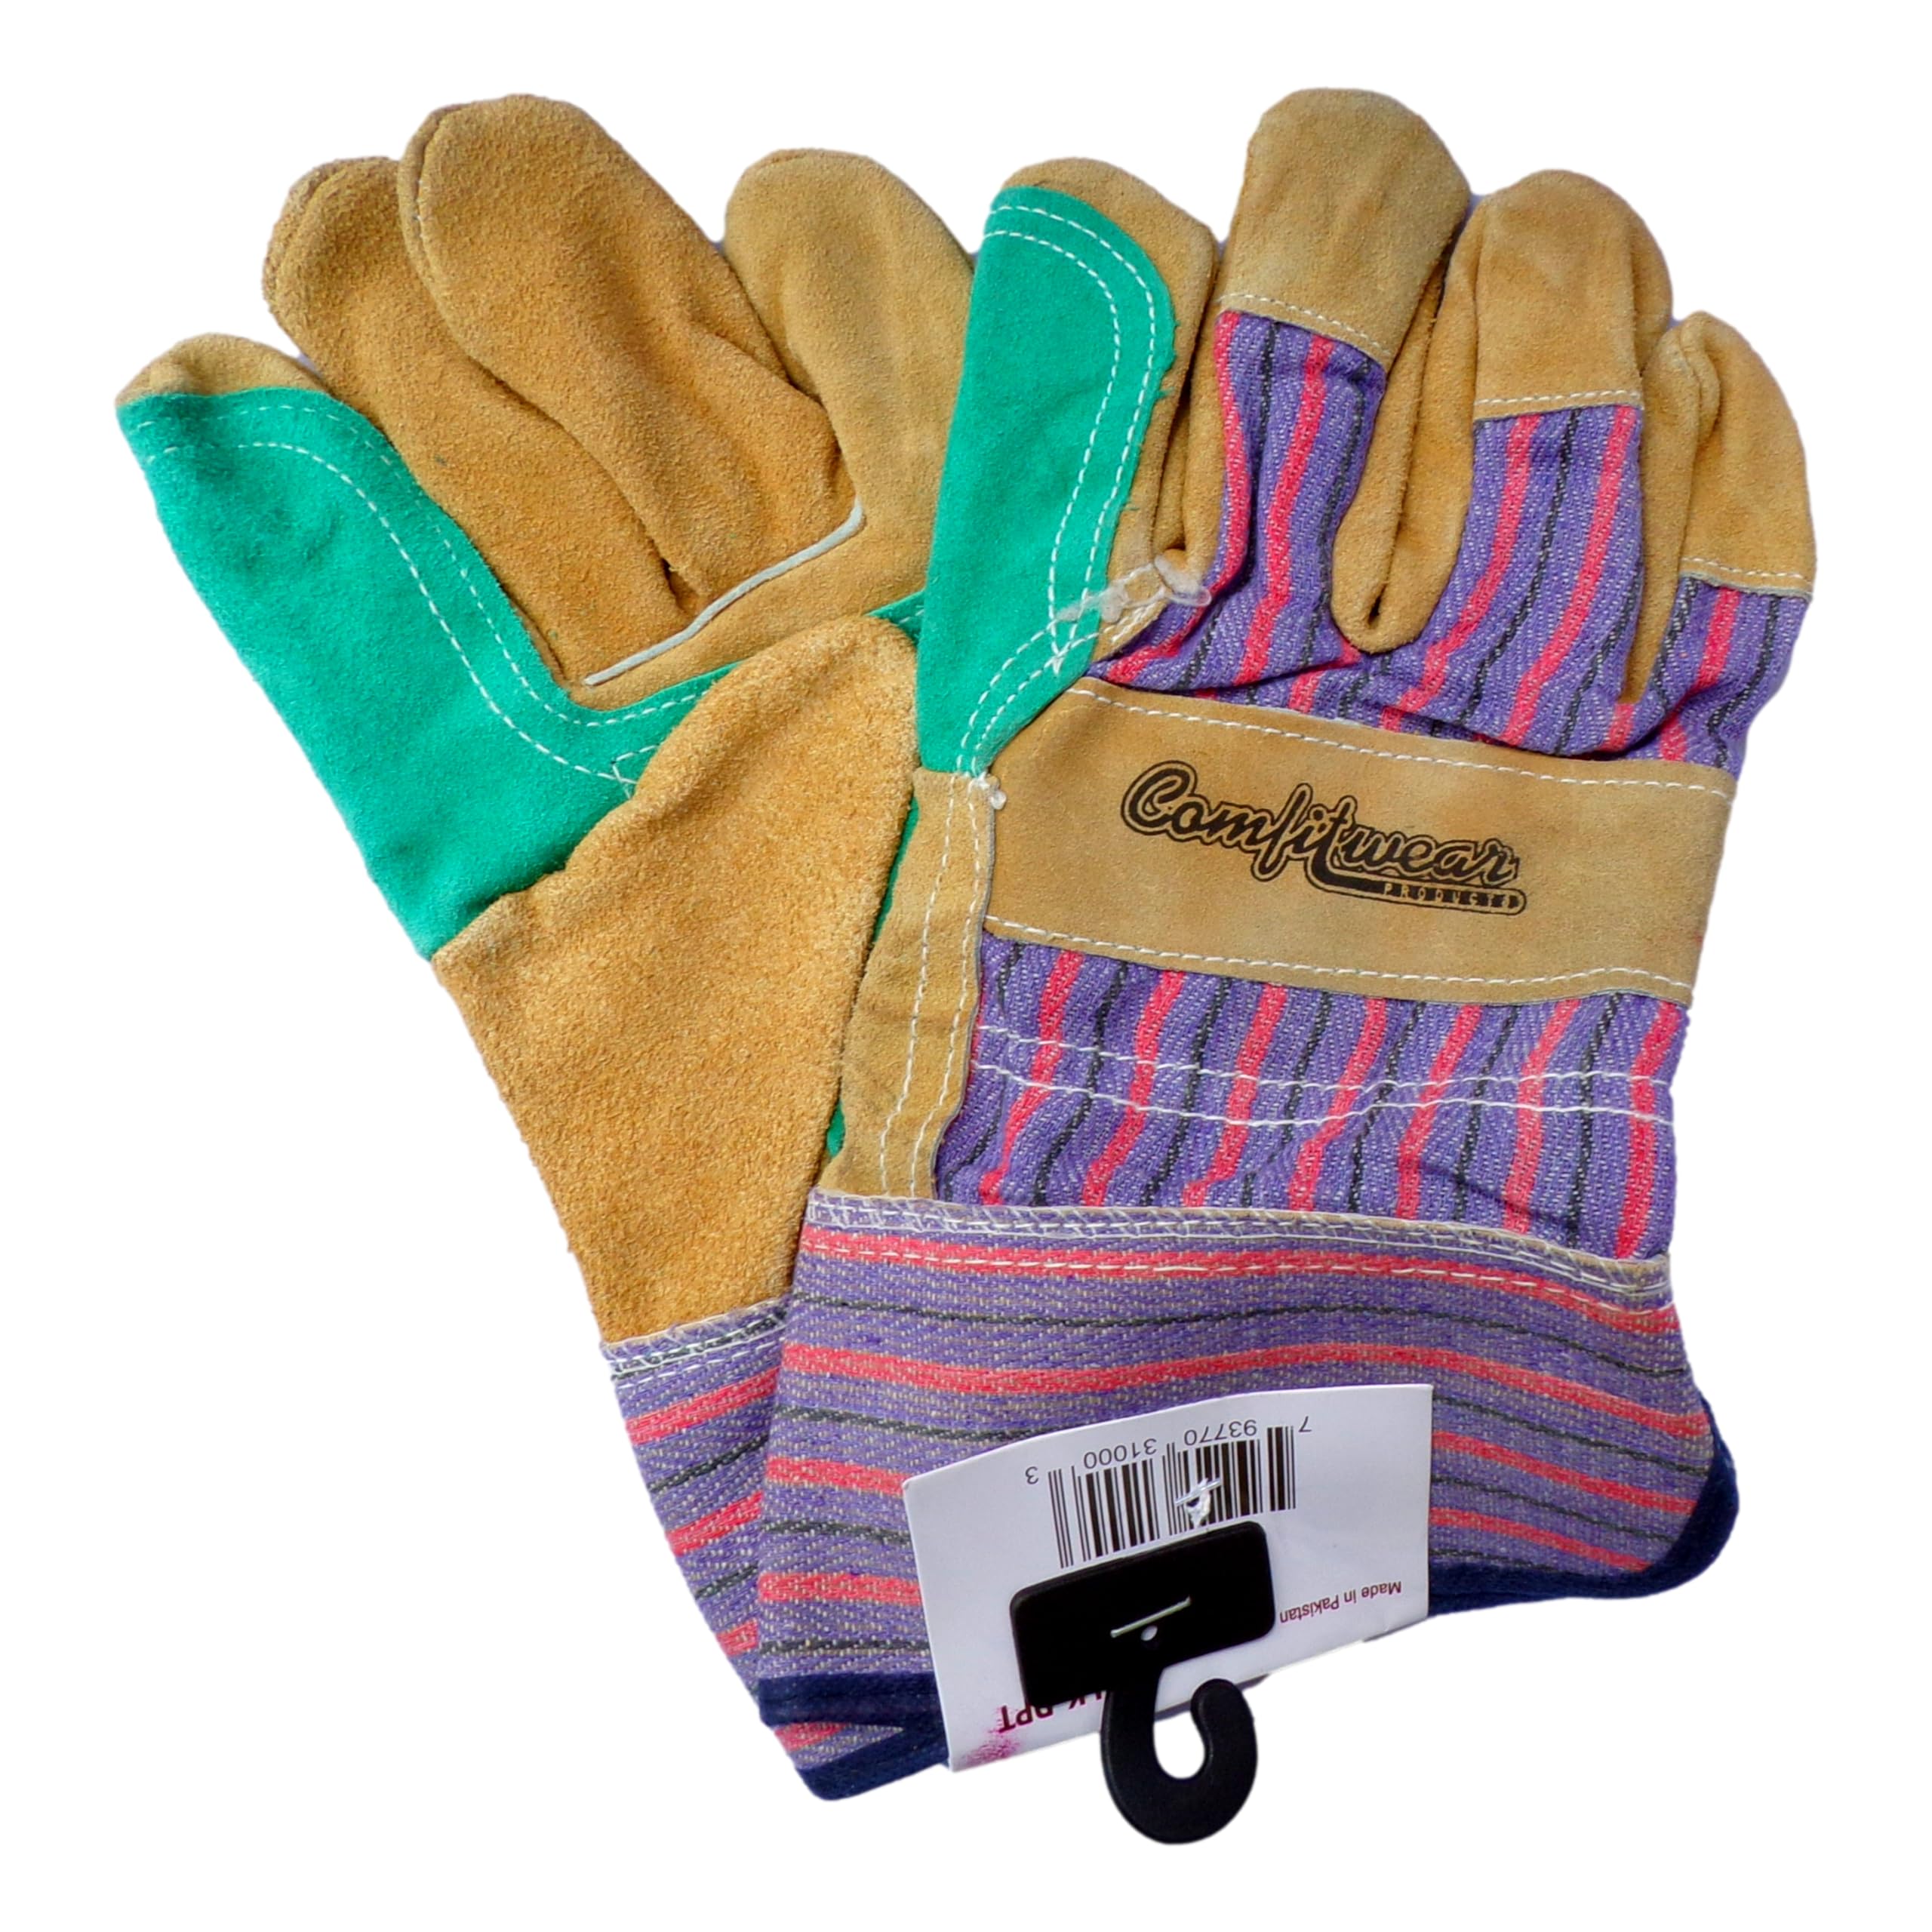 Comfitwear Double Palm Split Leather Gloves, 1 Dozen